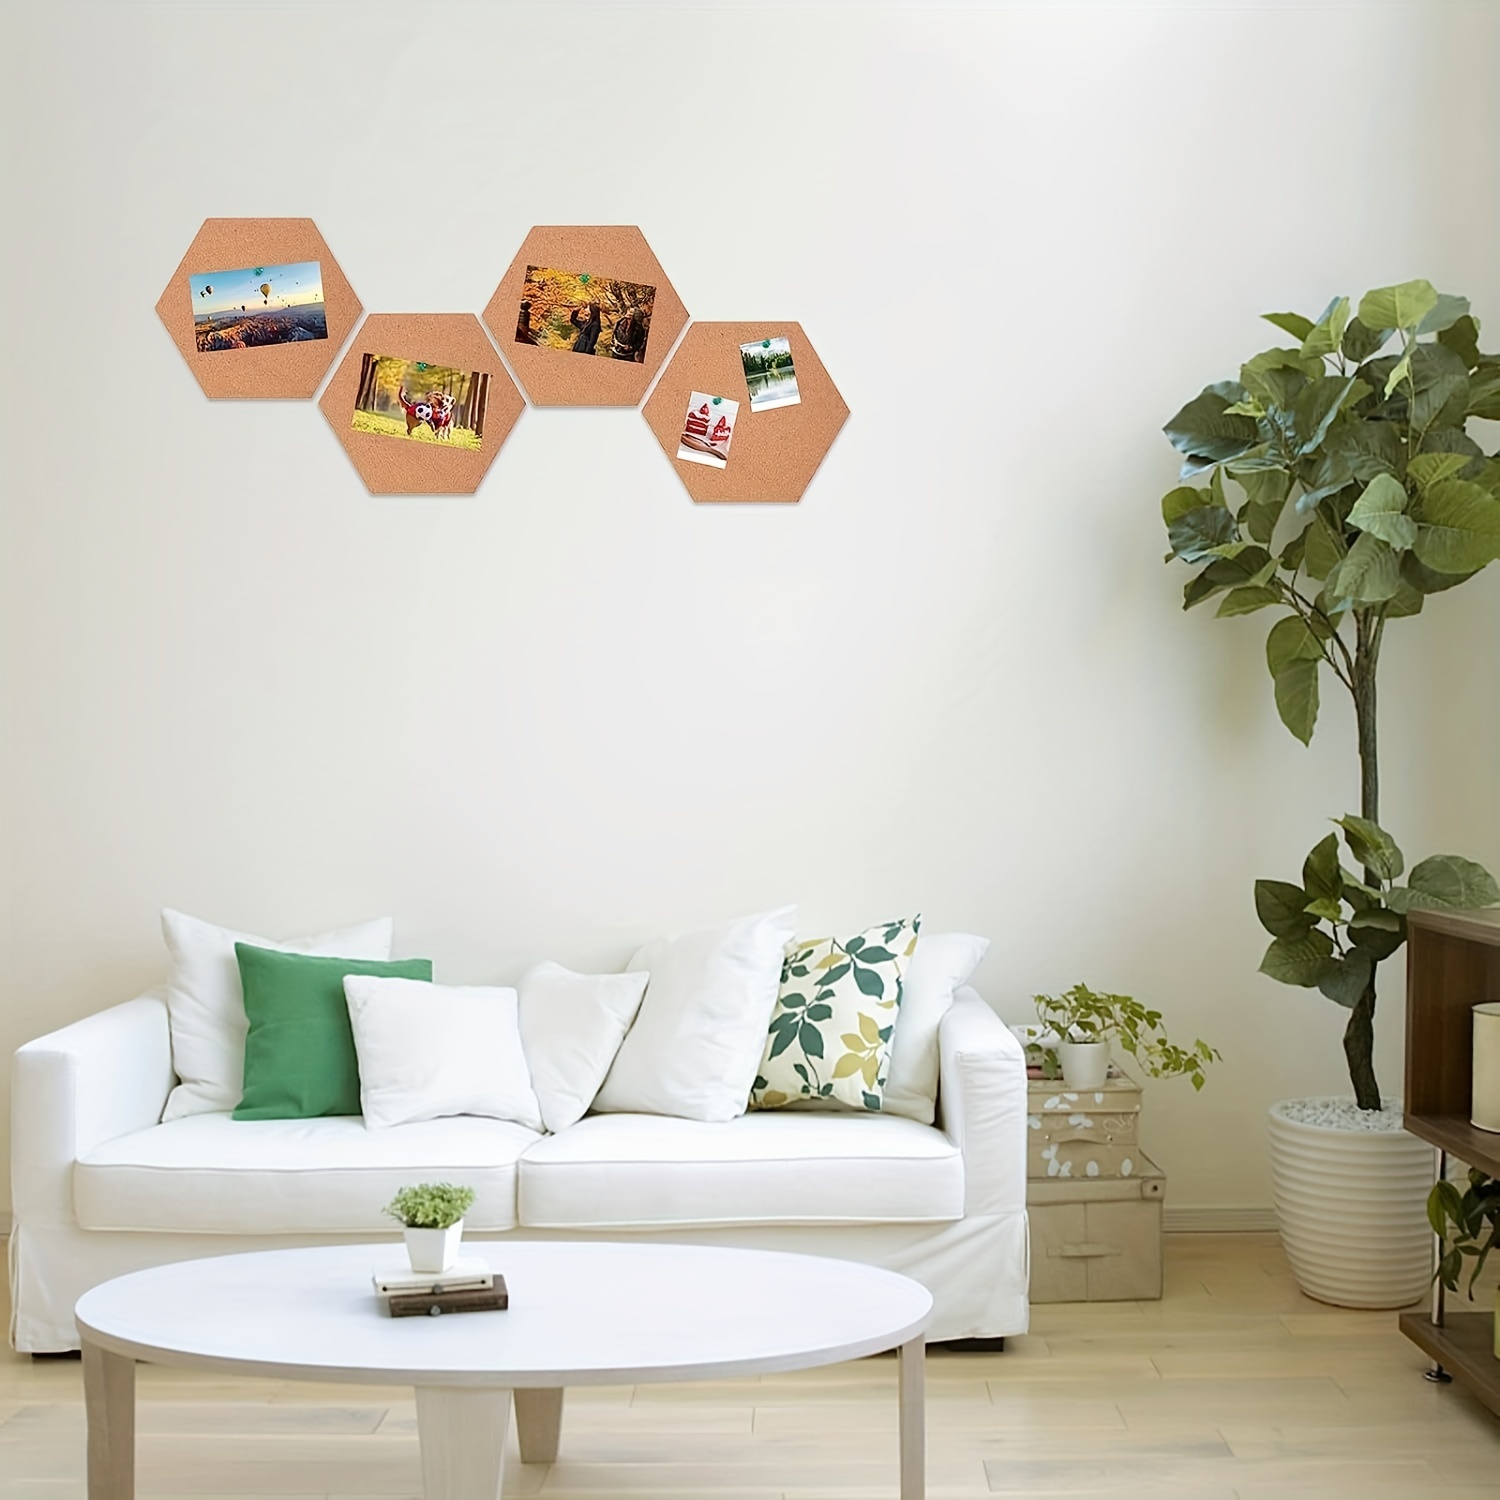 Hexagon Stickers Self-Adhesive Cork Board Tiles Wall Drawing